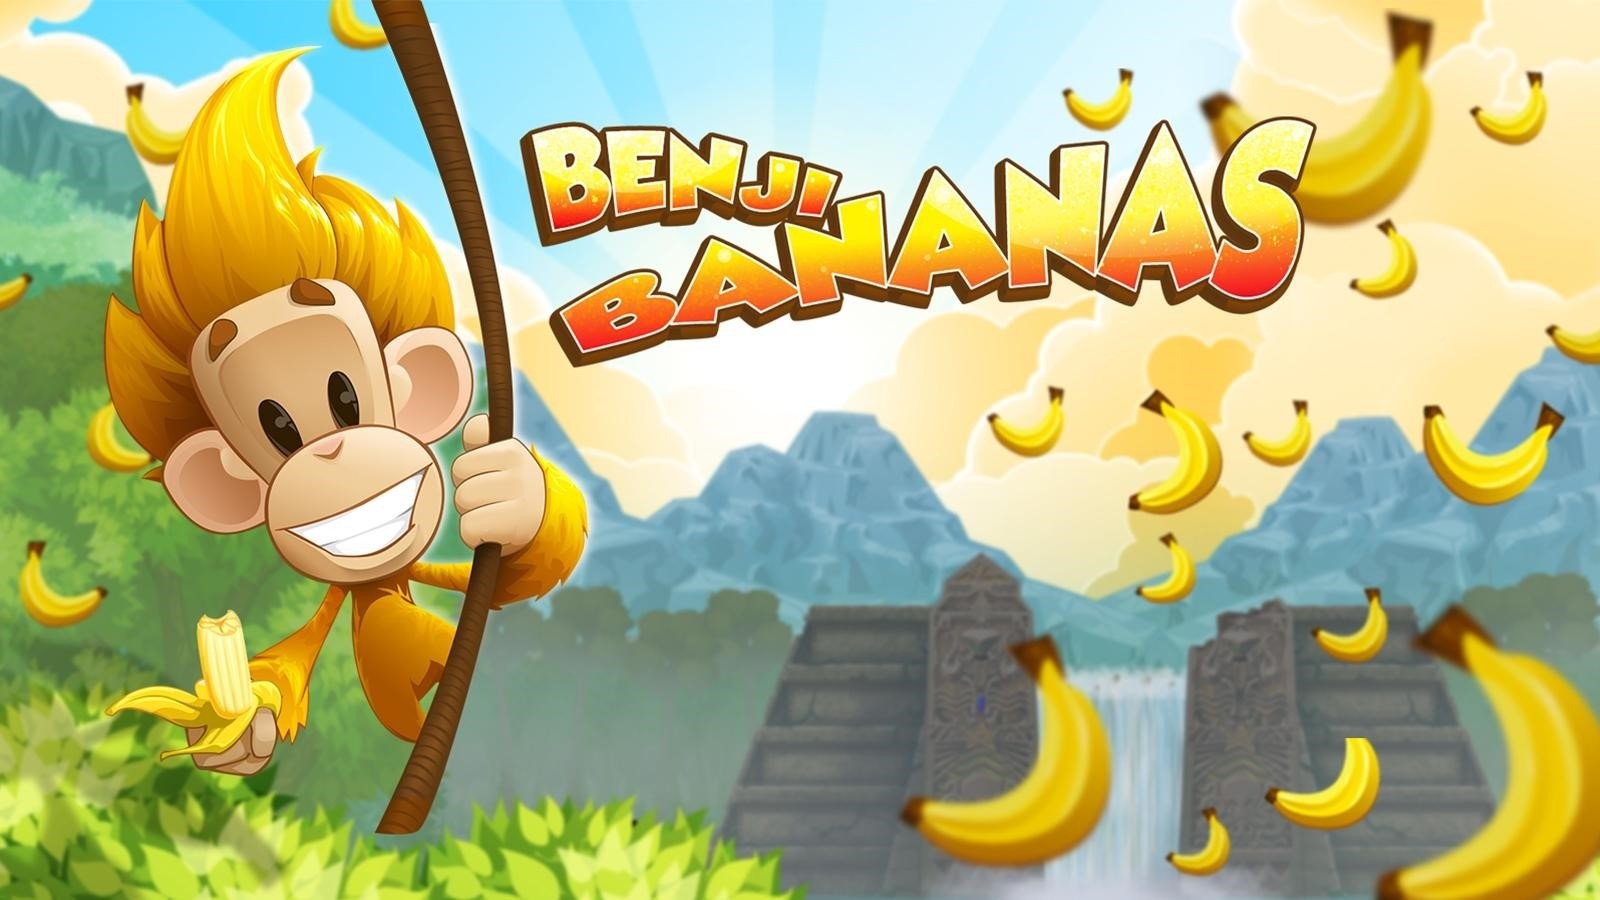 Benji Bananas: Behind the Popular Mobile P2E Game